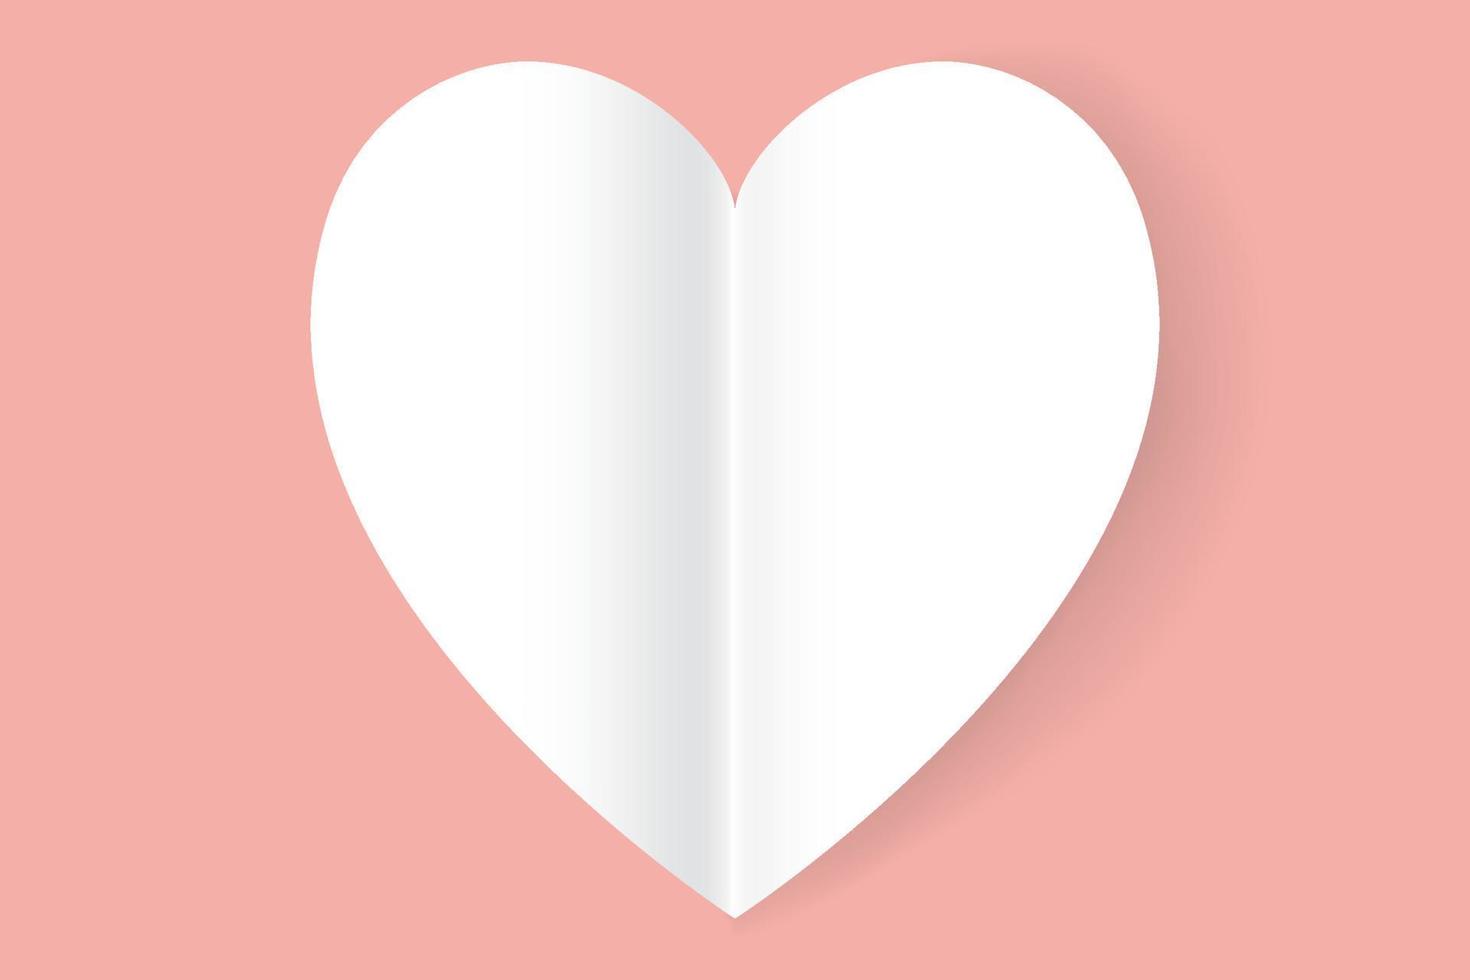 White heart symbol on pink background. Vector illustration.